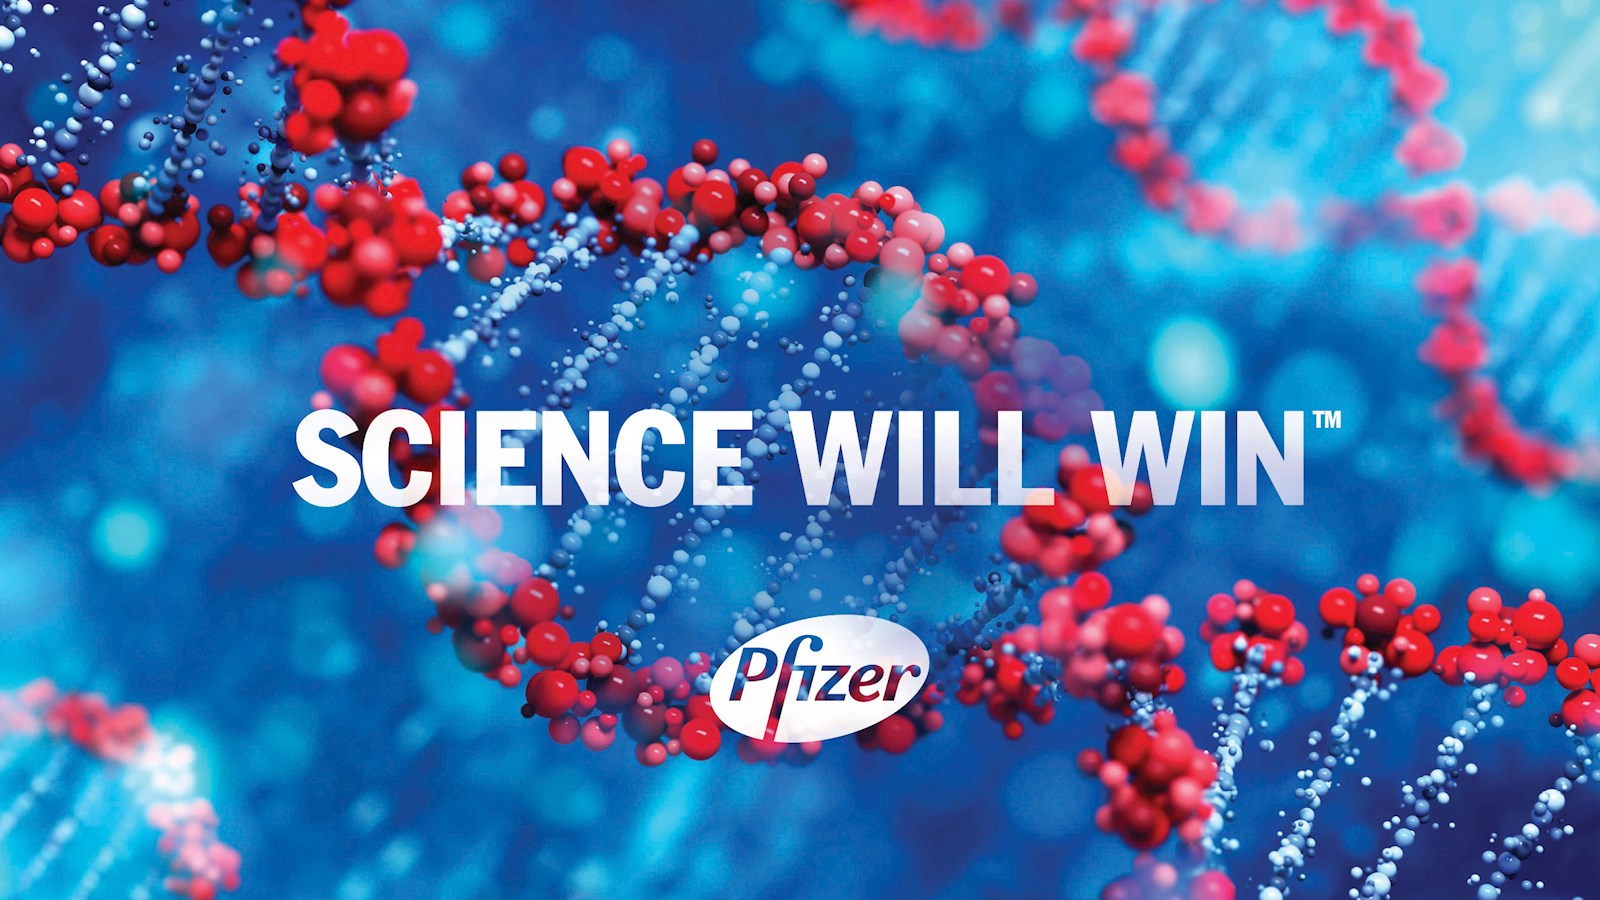 Science-Will-Win Pfizer